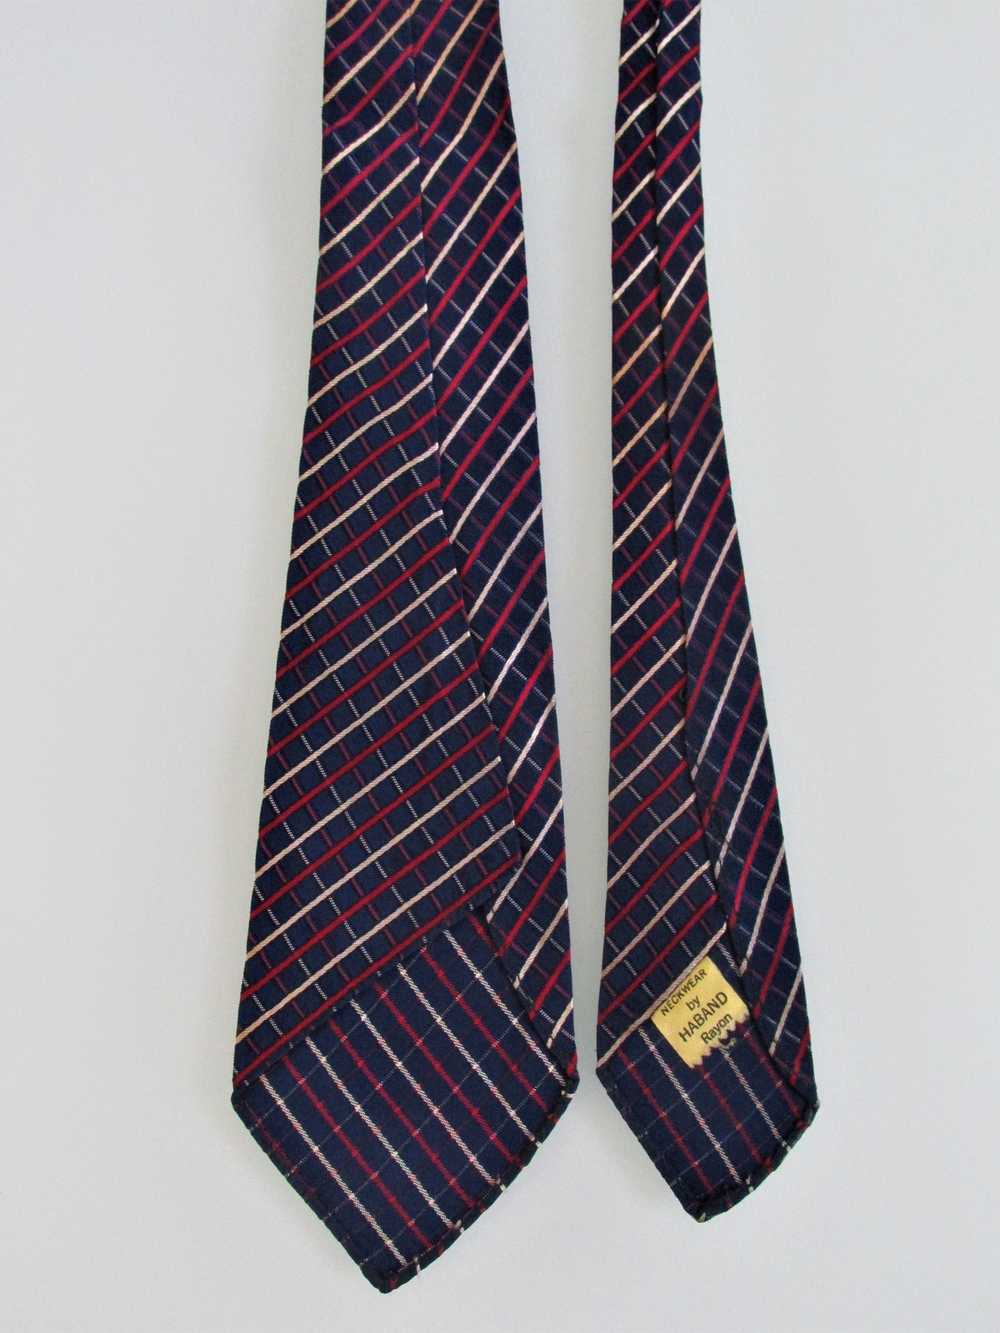 Haband Haband Vintage Men's Rayon Tie - image 4